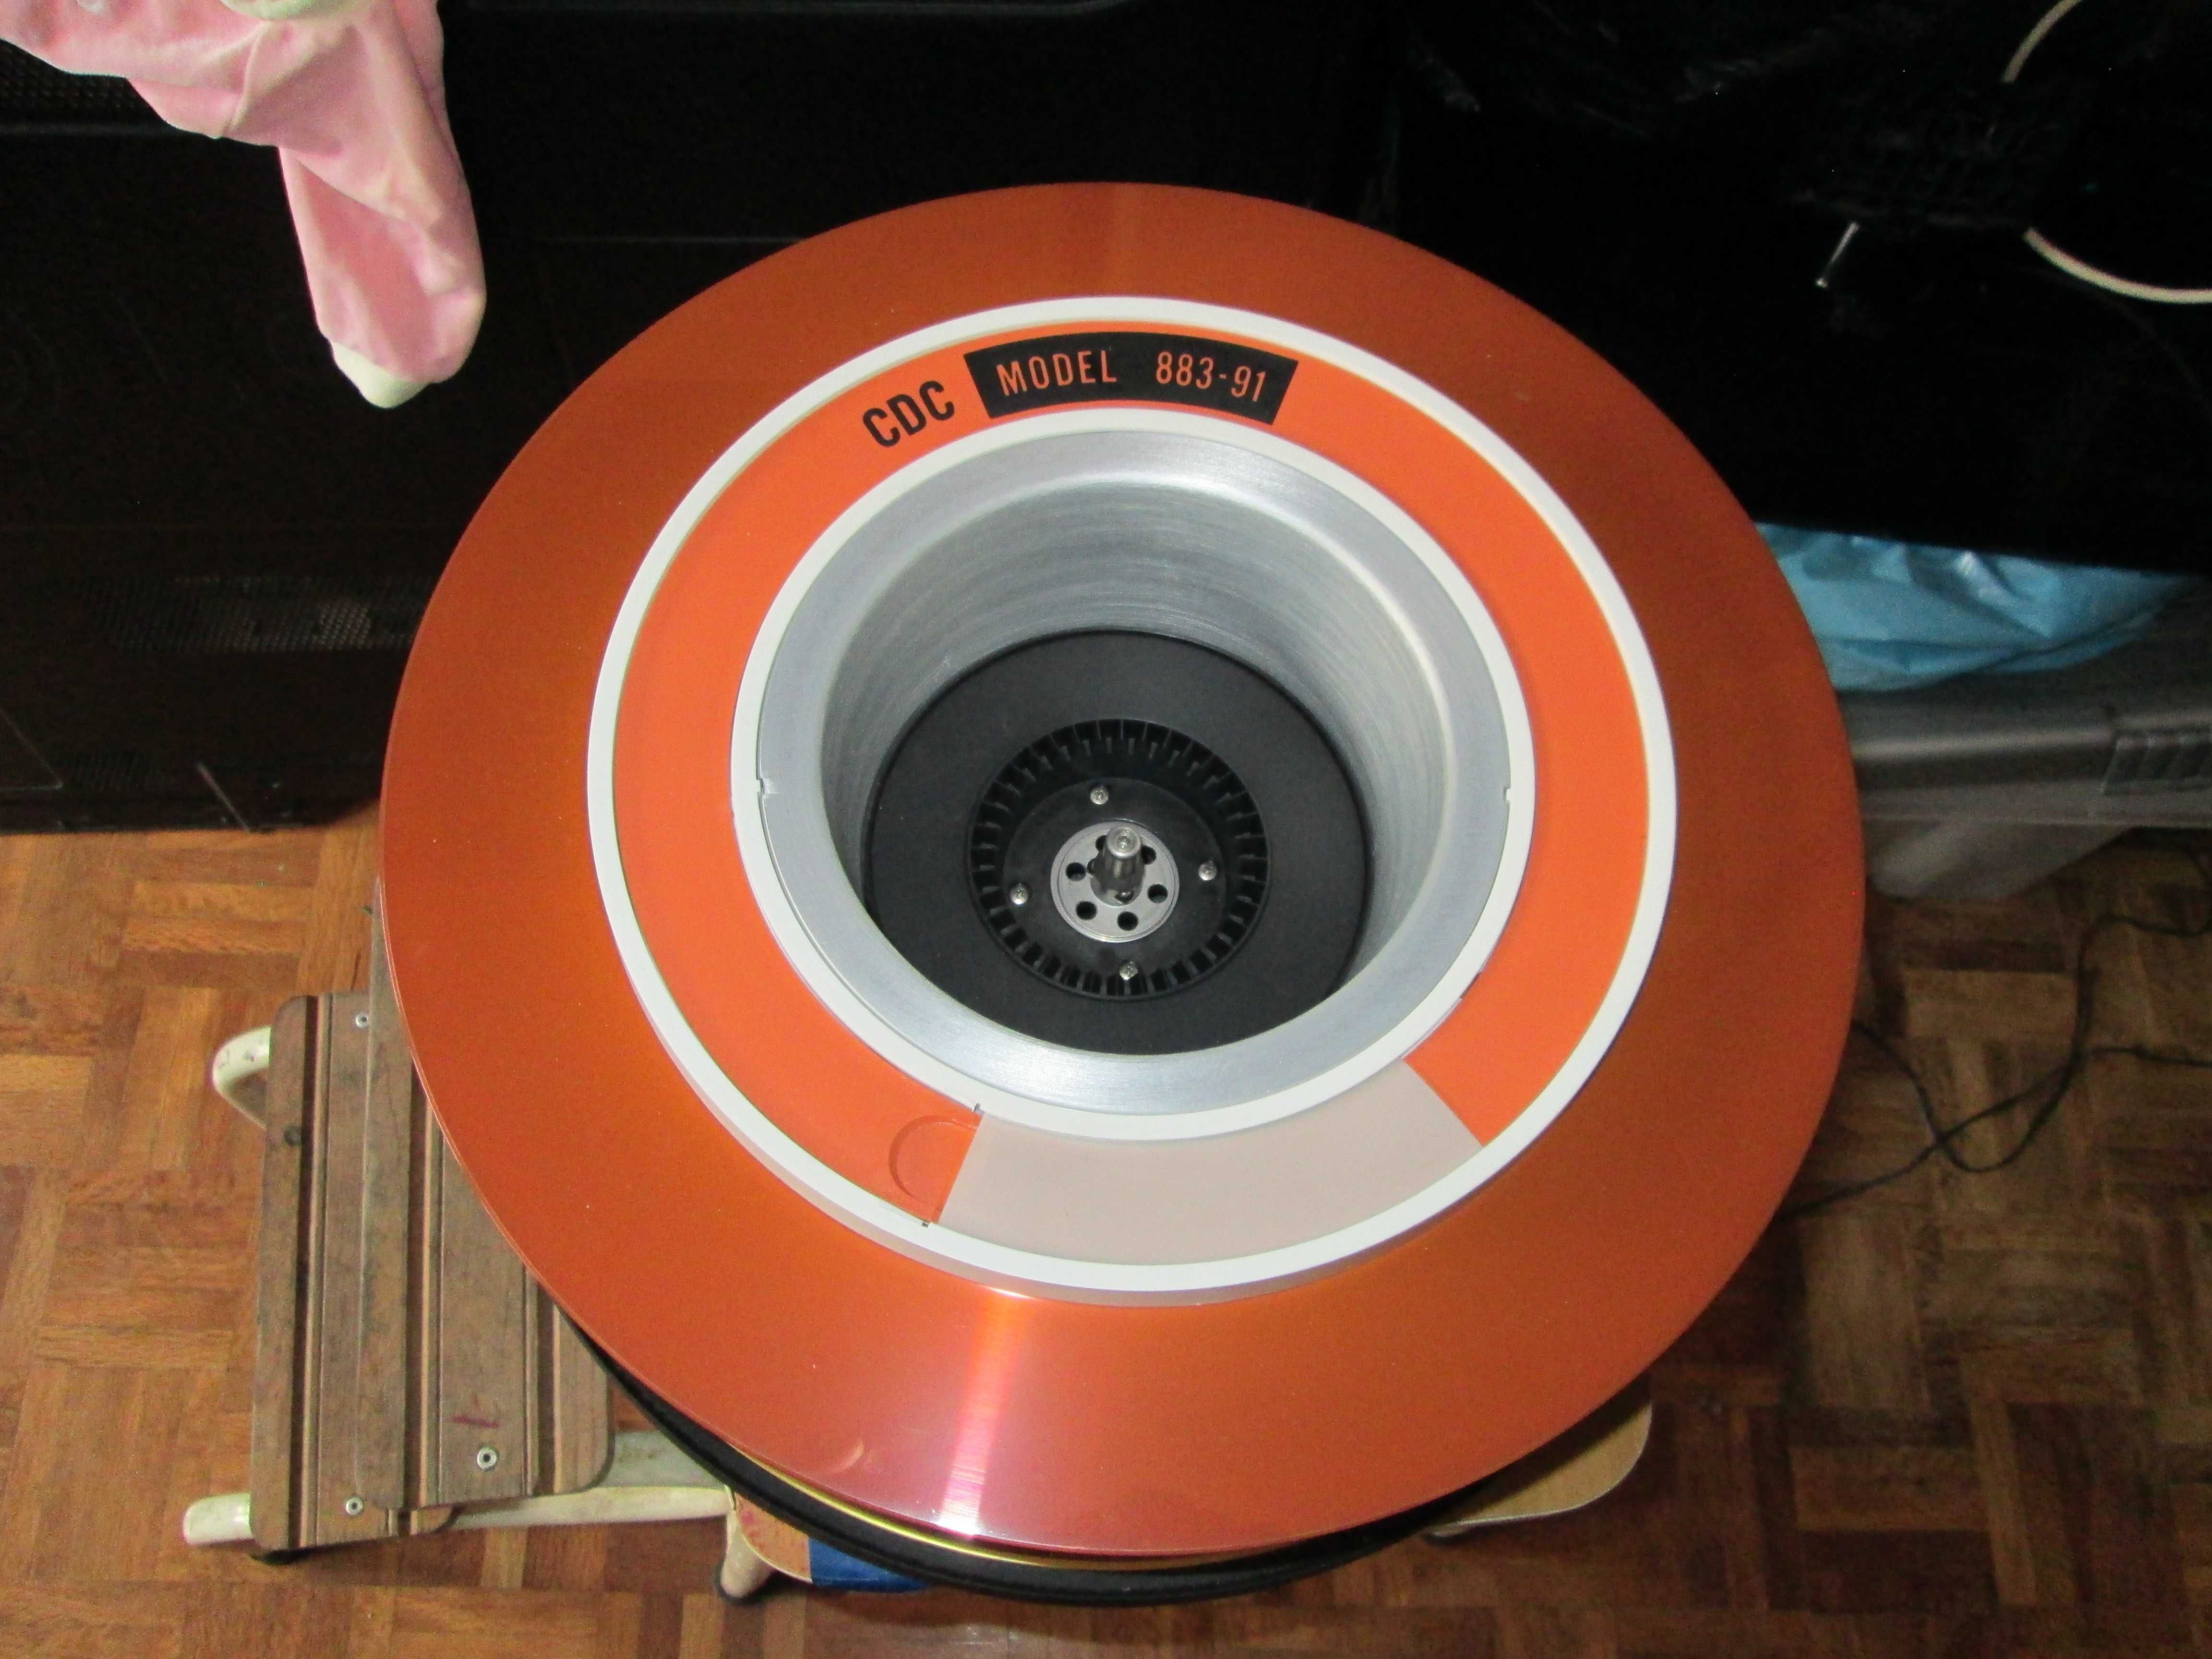 Pacote de disco de 300MB ,cdc model 883-91.